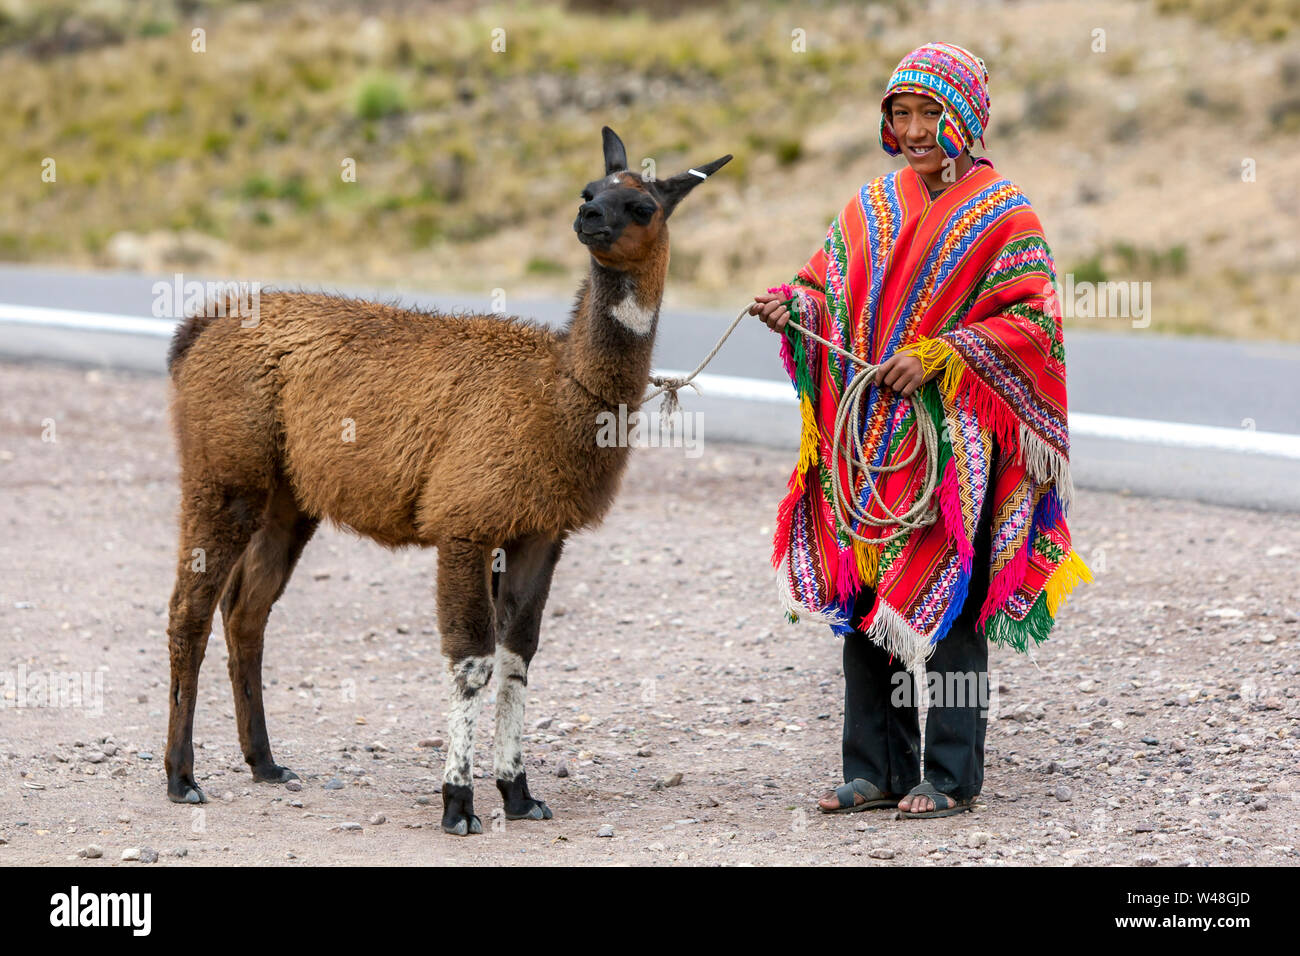 A Peruvian boy standing on the roadside holding a llama at La Region Puno Les Desea Feliz Viaje in Peru. Stock Photo